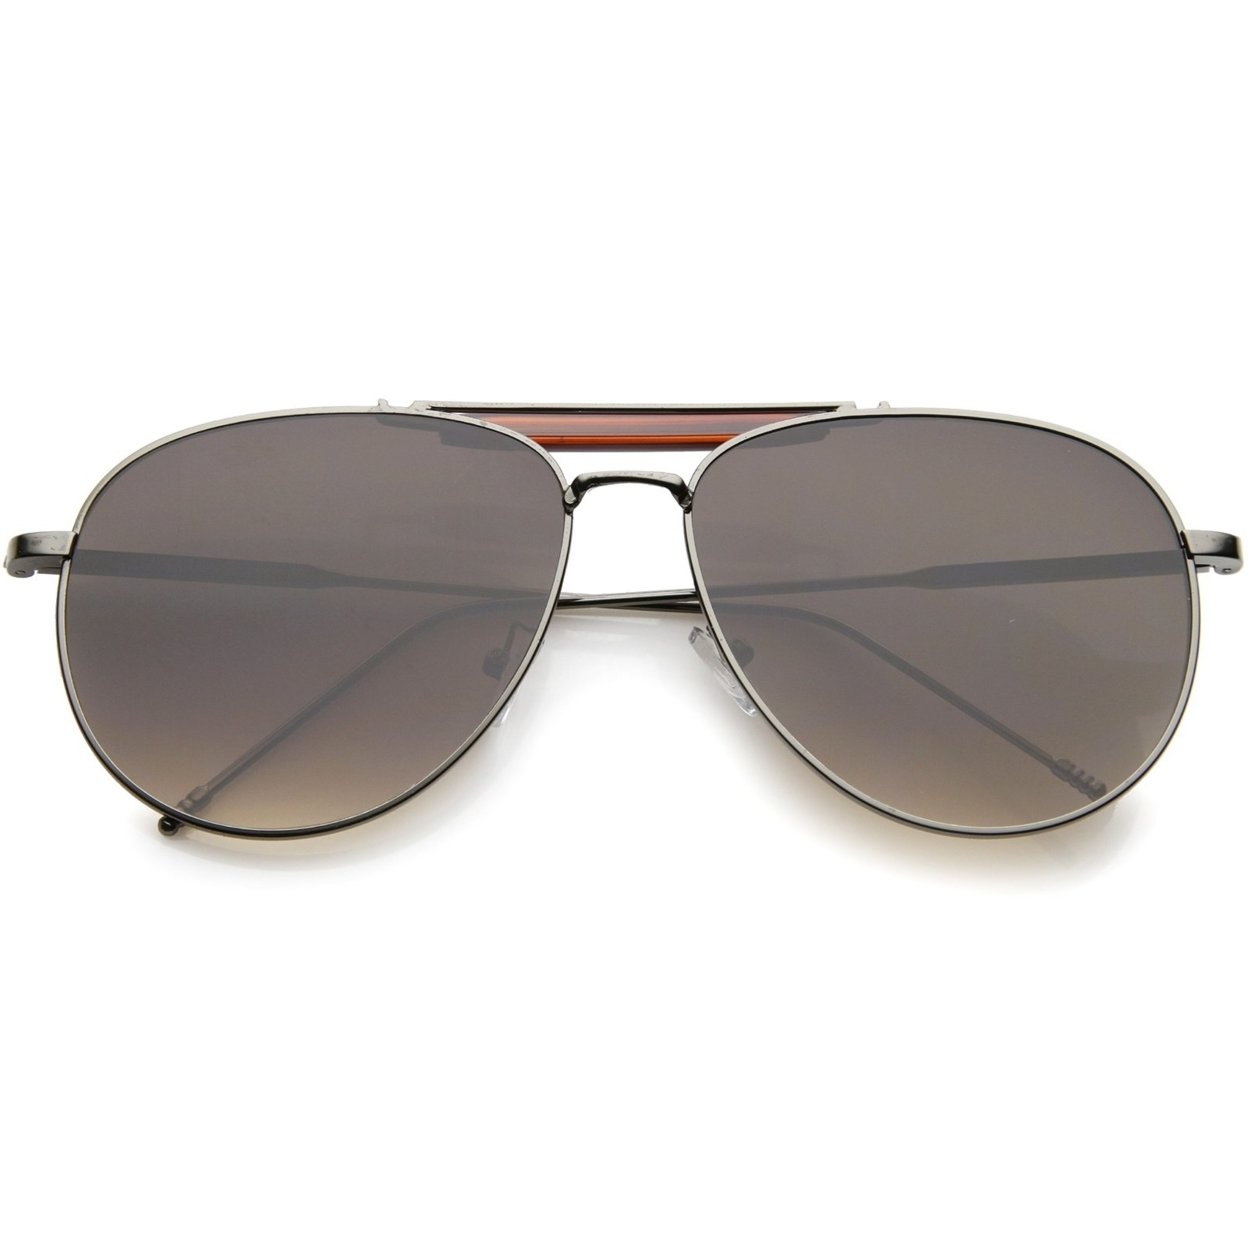 Classic Retro Metal Wire Teardrop Flat Lens Crossbar Aviator Sunglasses - Gunmetal-Brown / Lavender